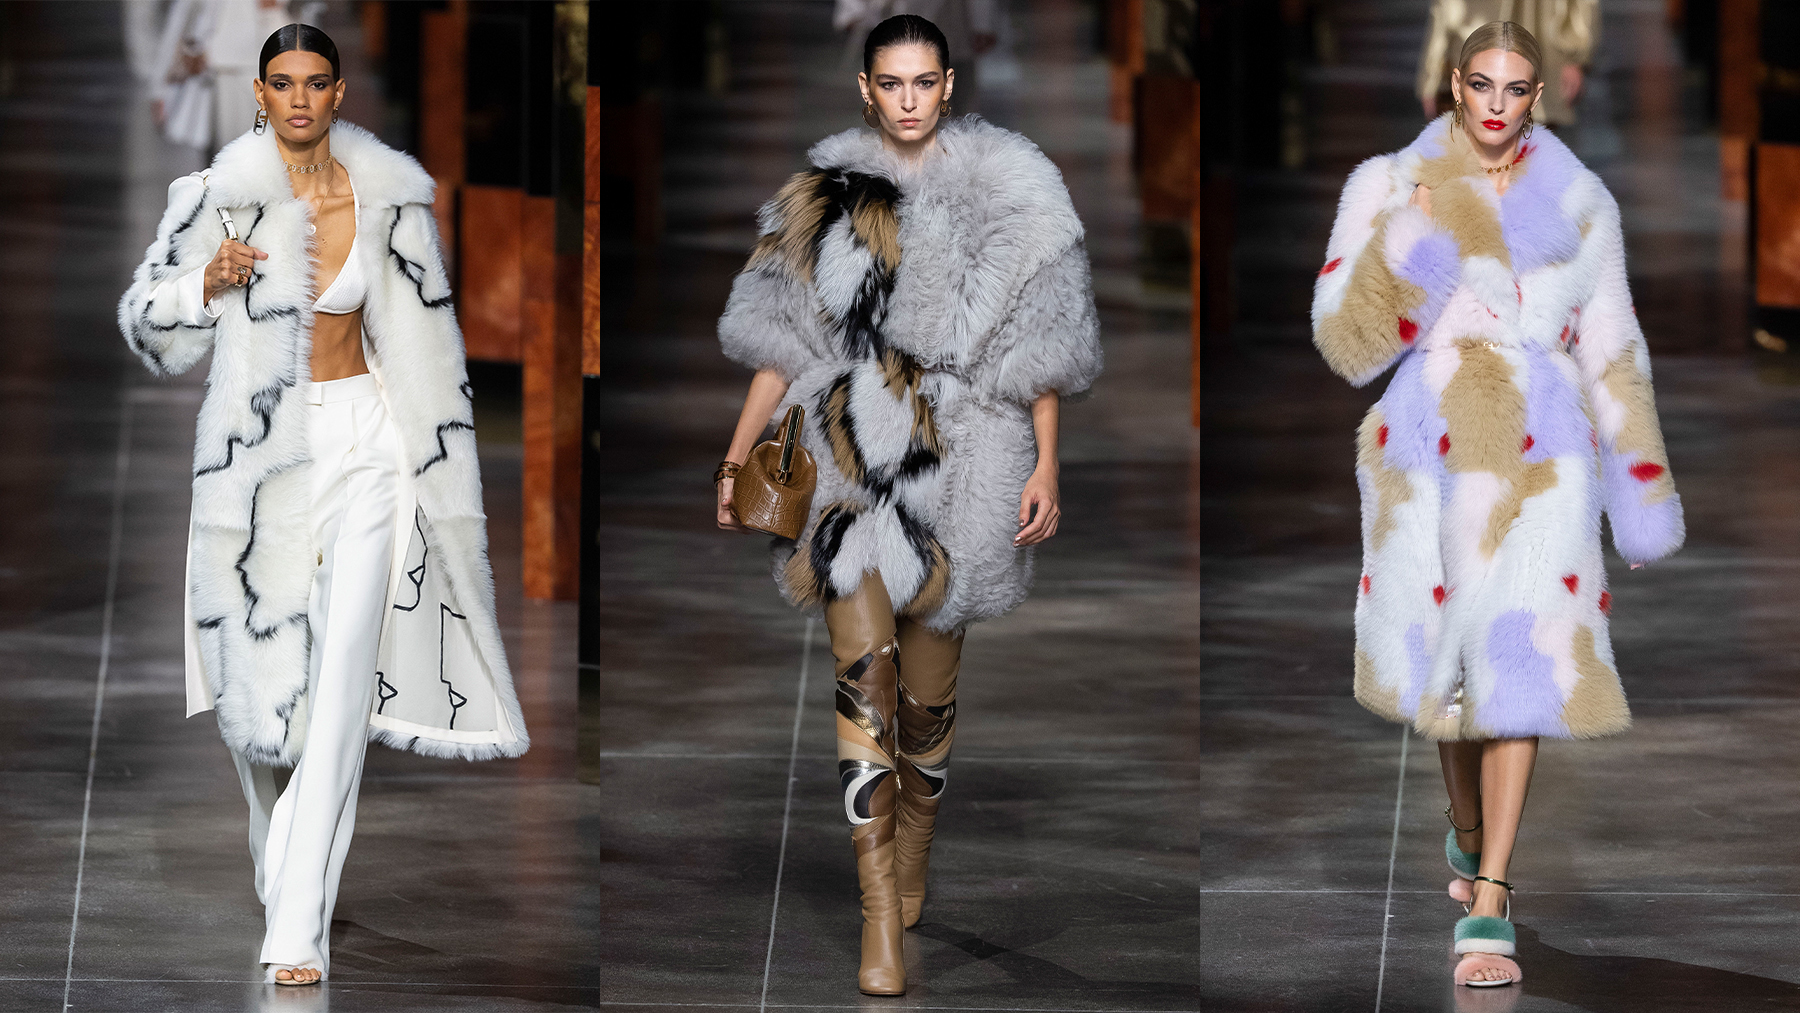 Will fashion stop using exotic animal skins?